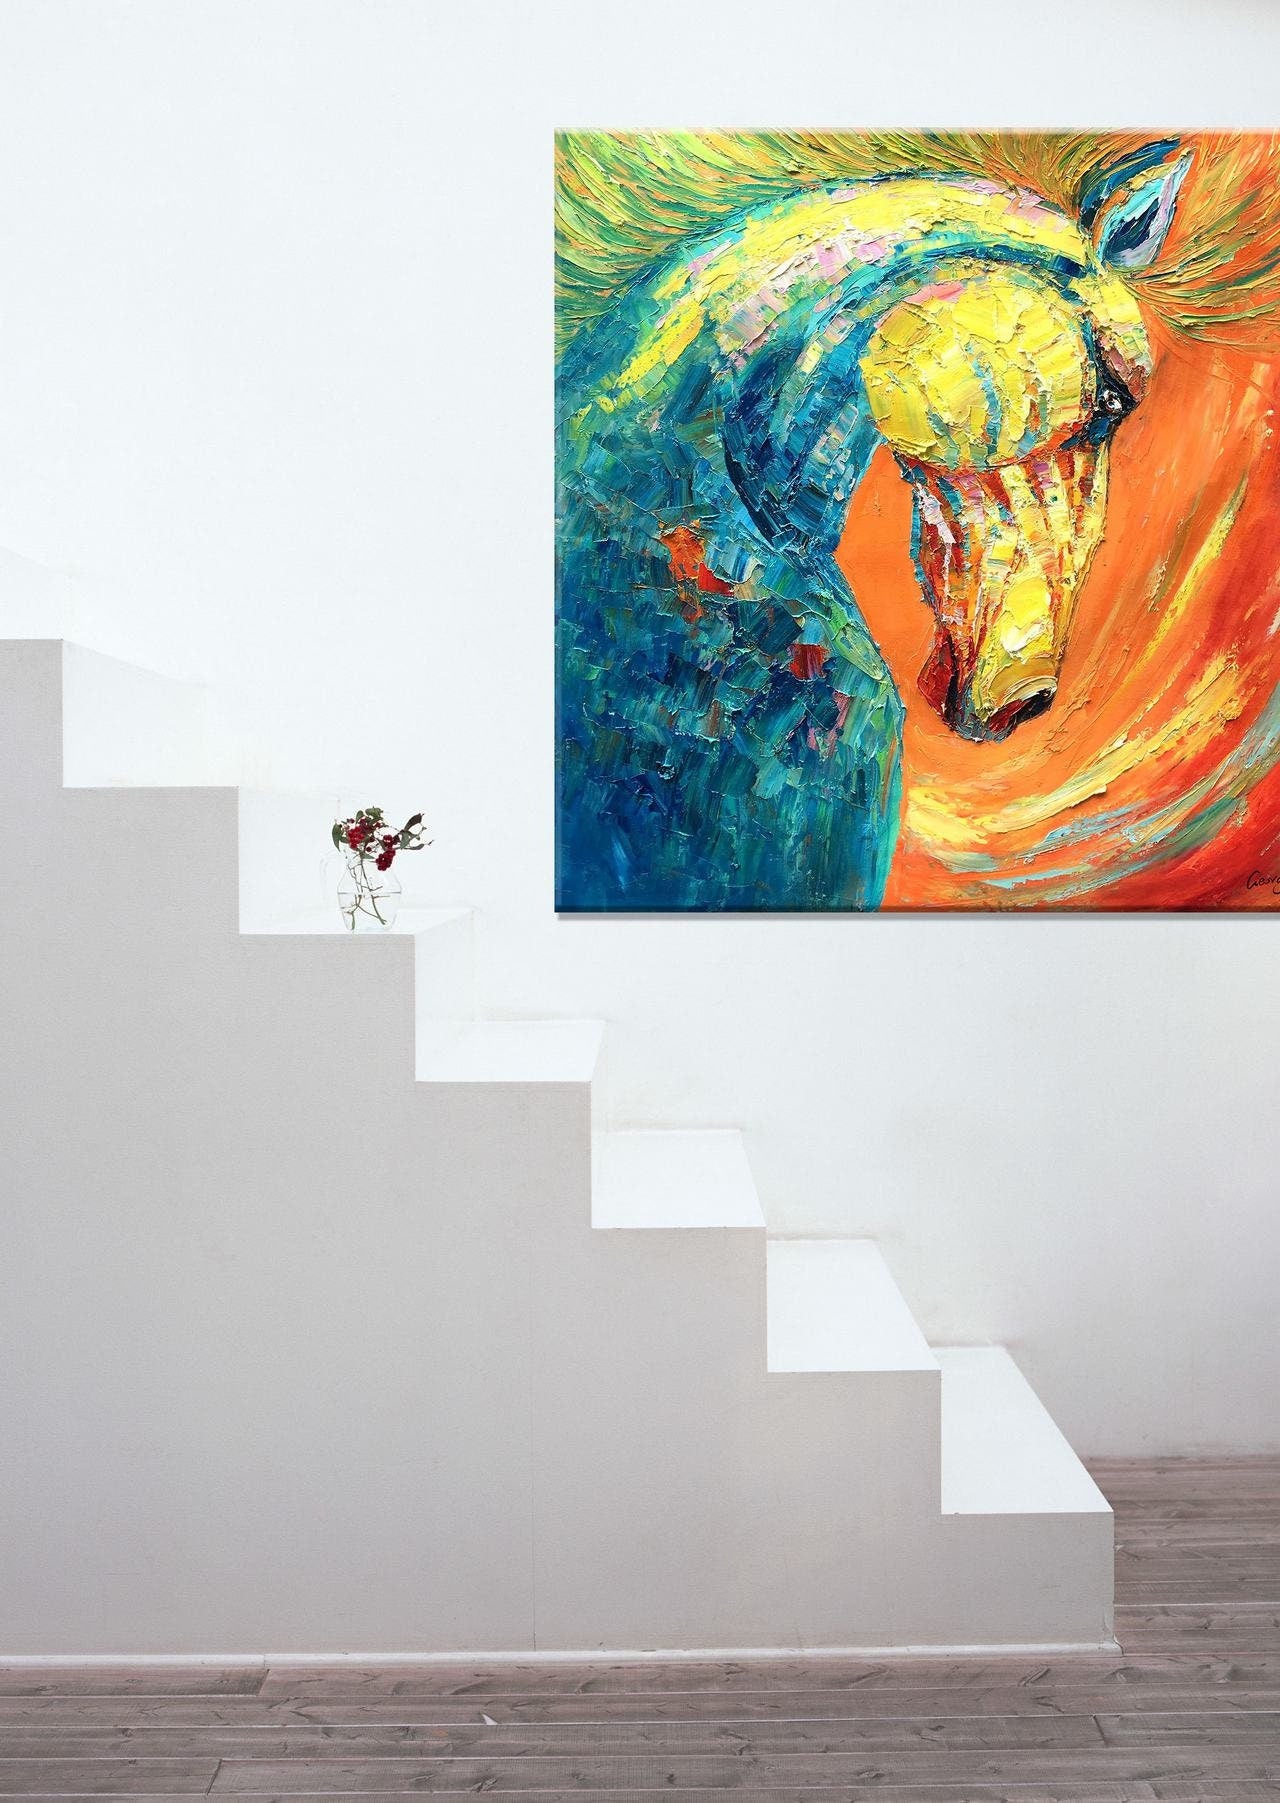 Horse Wall Art, Oil Painting Horse, Canvas Wall Decor, Living Room Wall Decor, Original Abstract Art, Abstract Painting, Abstract Canvas Art